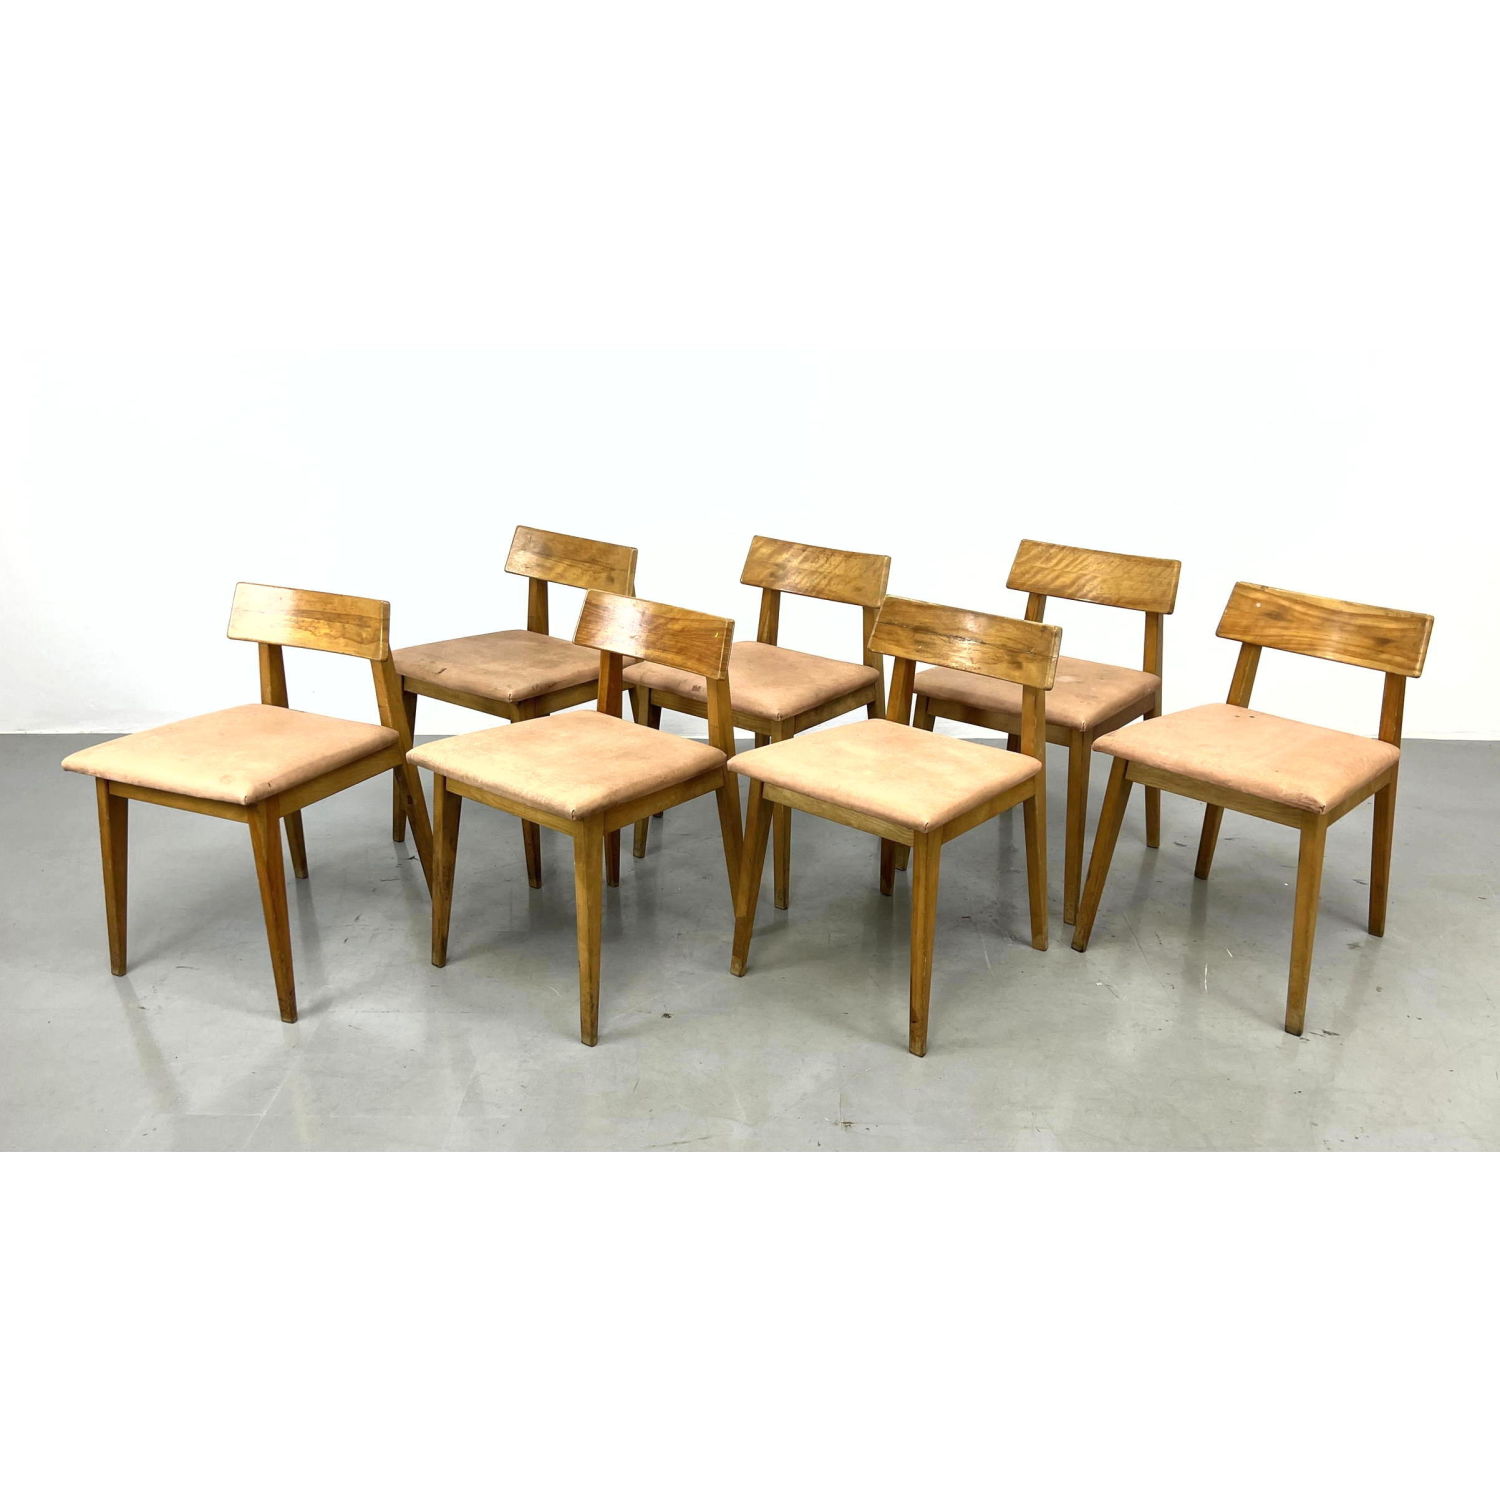 Set 7 Janet Rosenblum dining chairs 2b894c